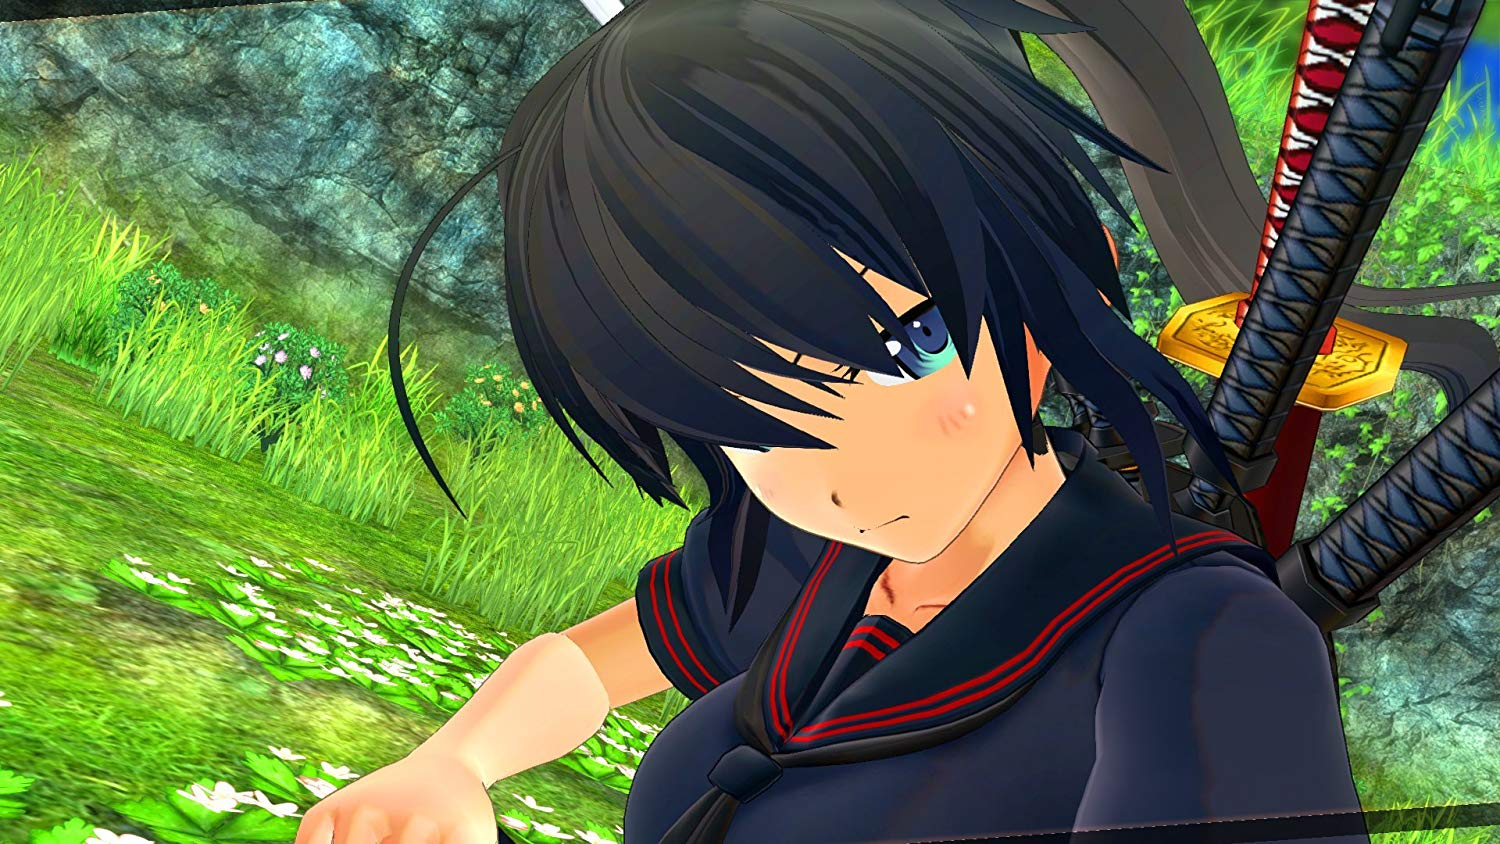 XSEED Removing Intimacy Mode From PS4 Version Of Senran Kagura Burst  Re:Newal - Game Informer